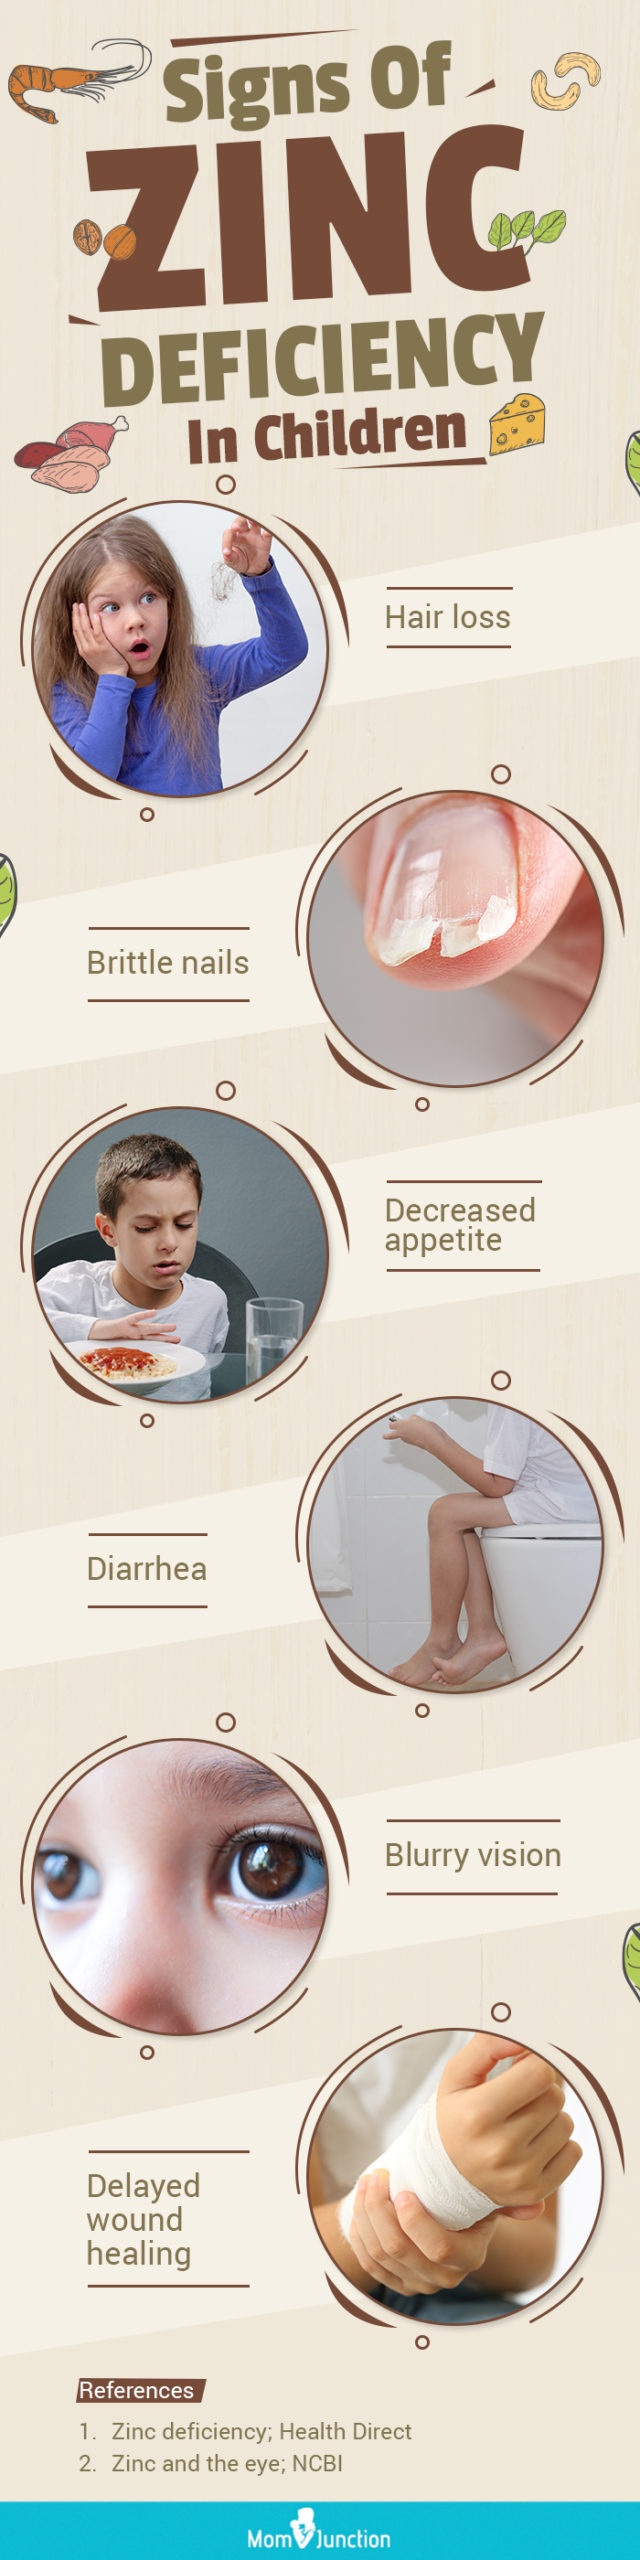 signs of zinc deficiency in children (infographic)